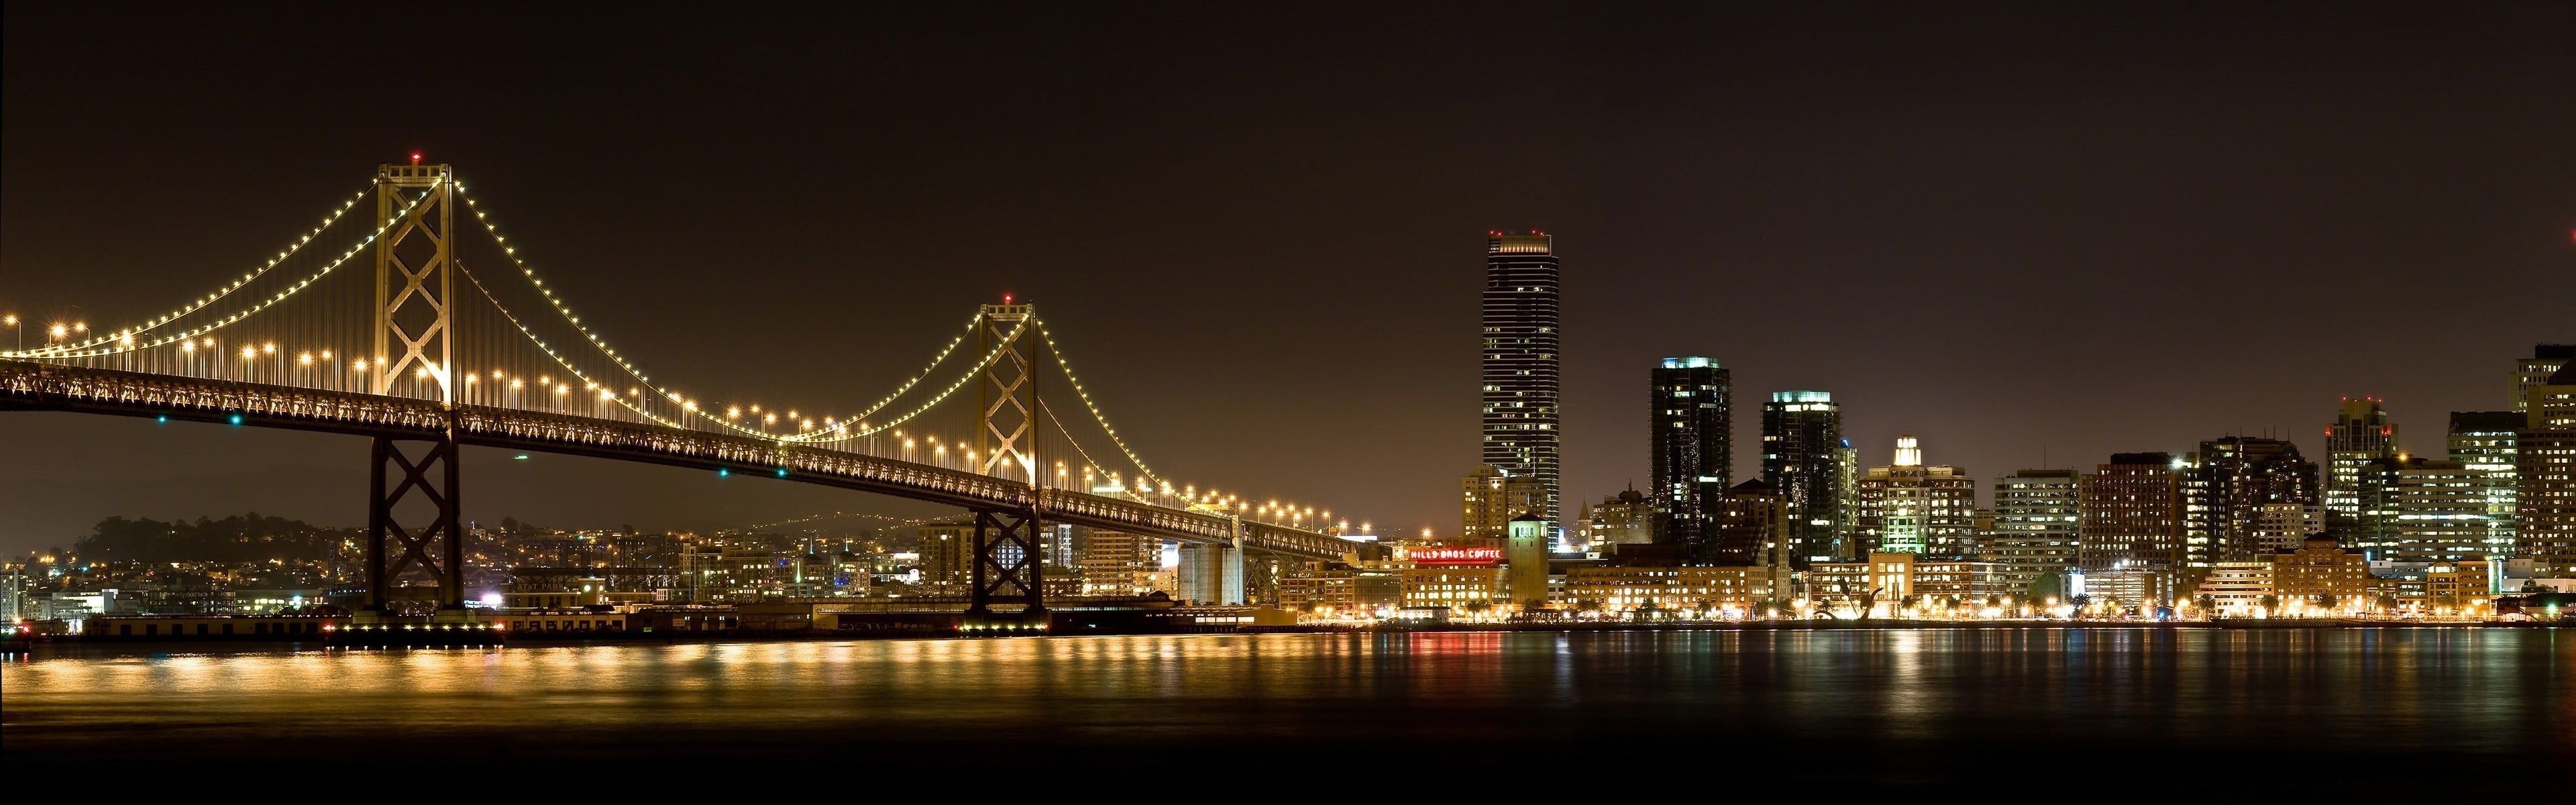 San Francisco Skyline, Dual monitor wallpapers, Urban views, Cityscape collection, 3840x1200 Dual Screen Desktop